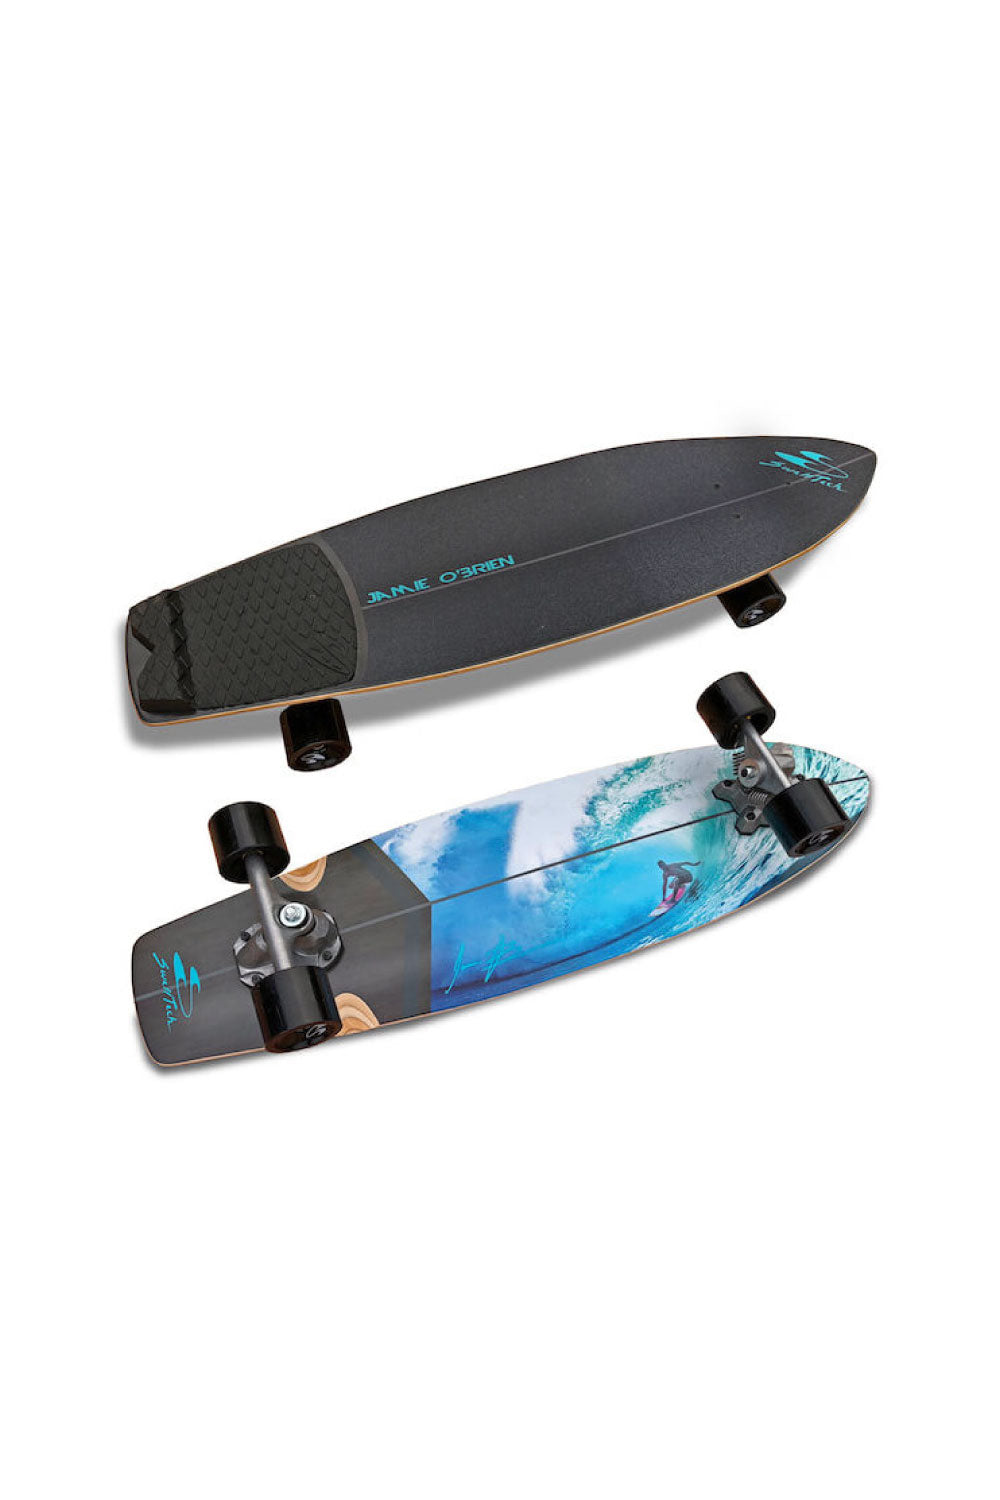 Swelltech Surf Skate Jamie O'Brien Banzai Complete Skateboard